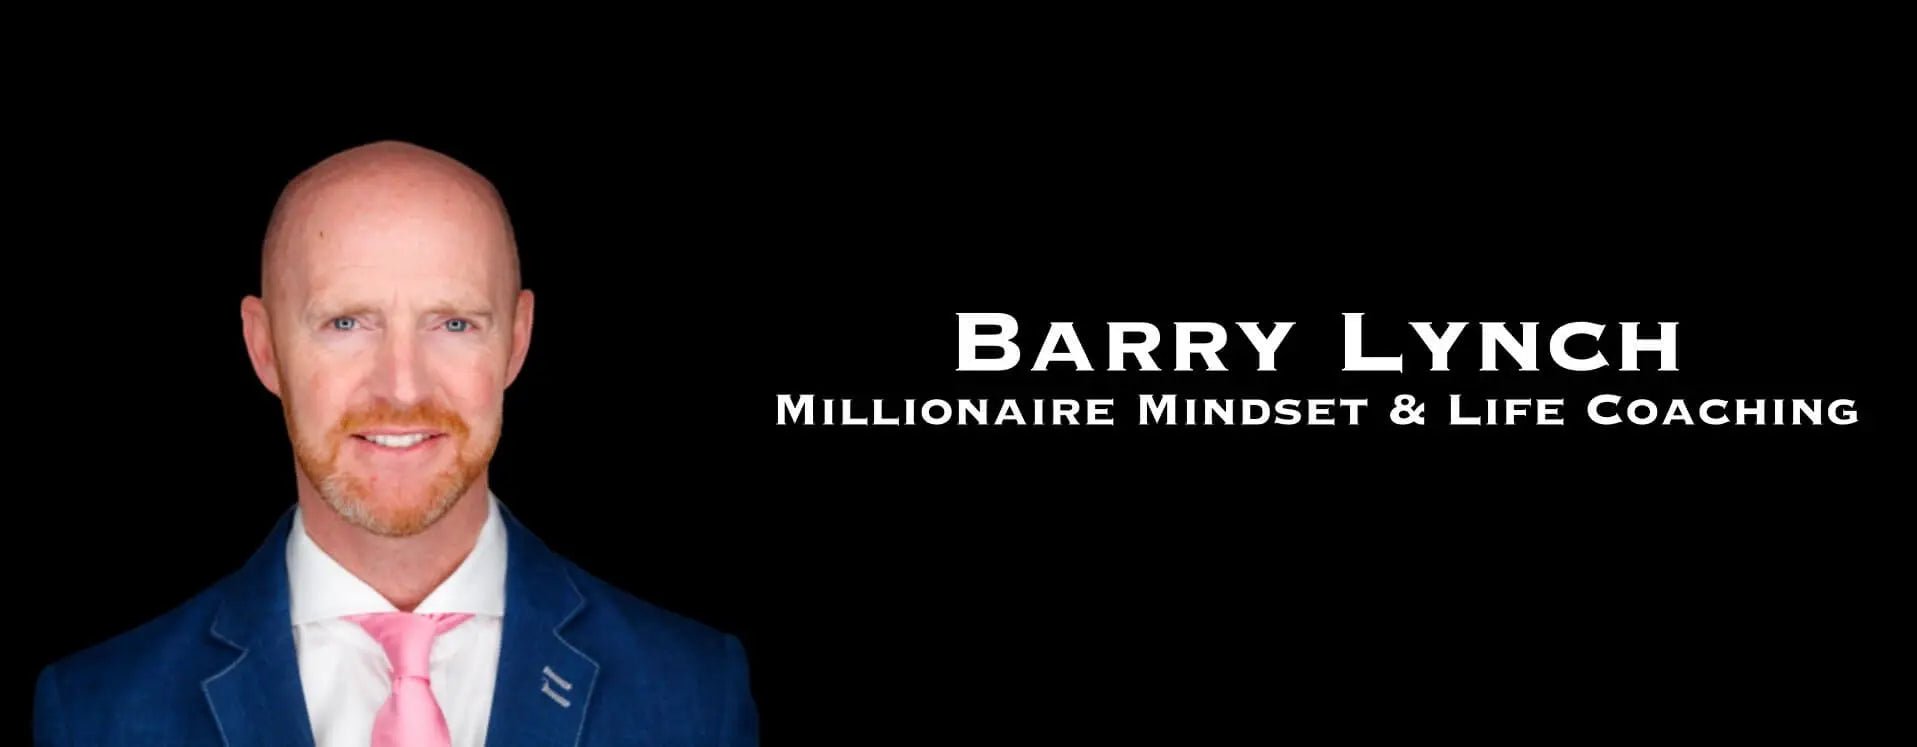 Barry Lynch | Millionaire mindset & Life Coaching